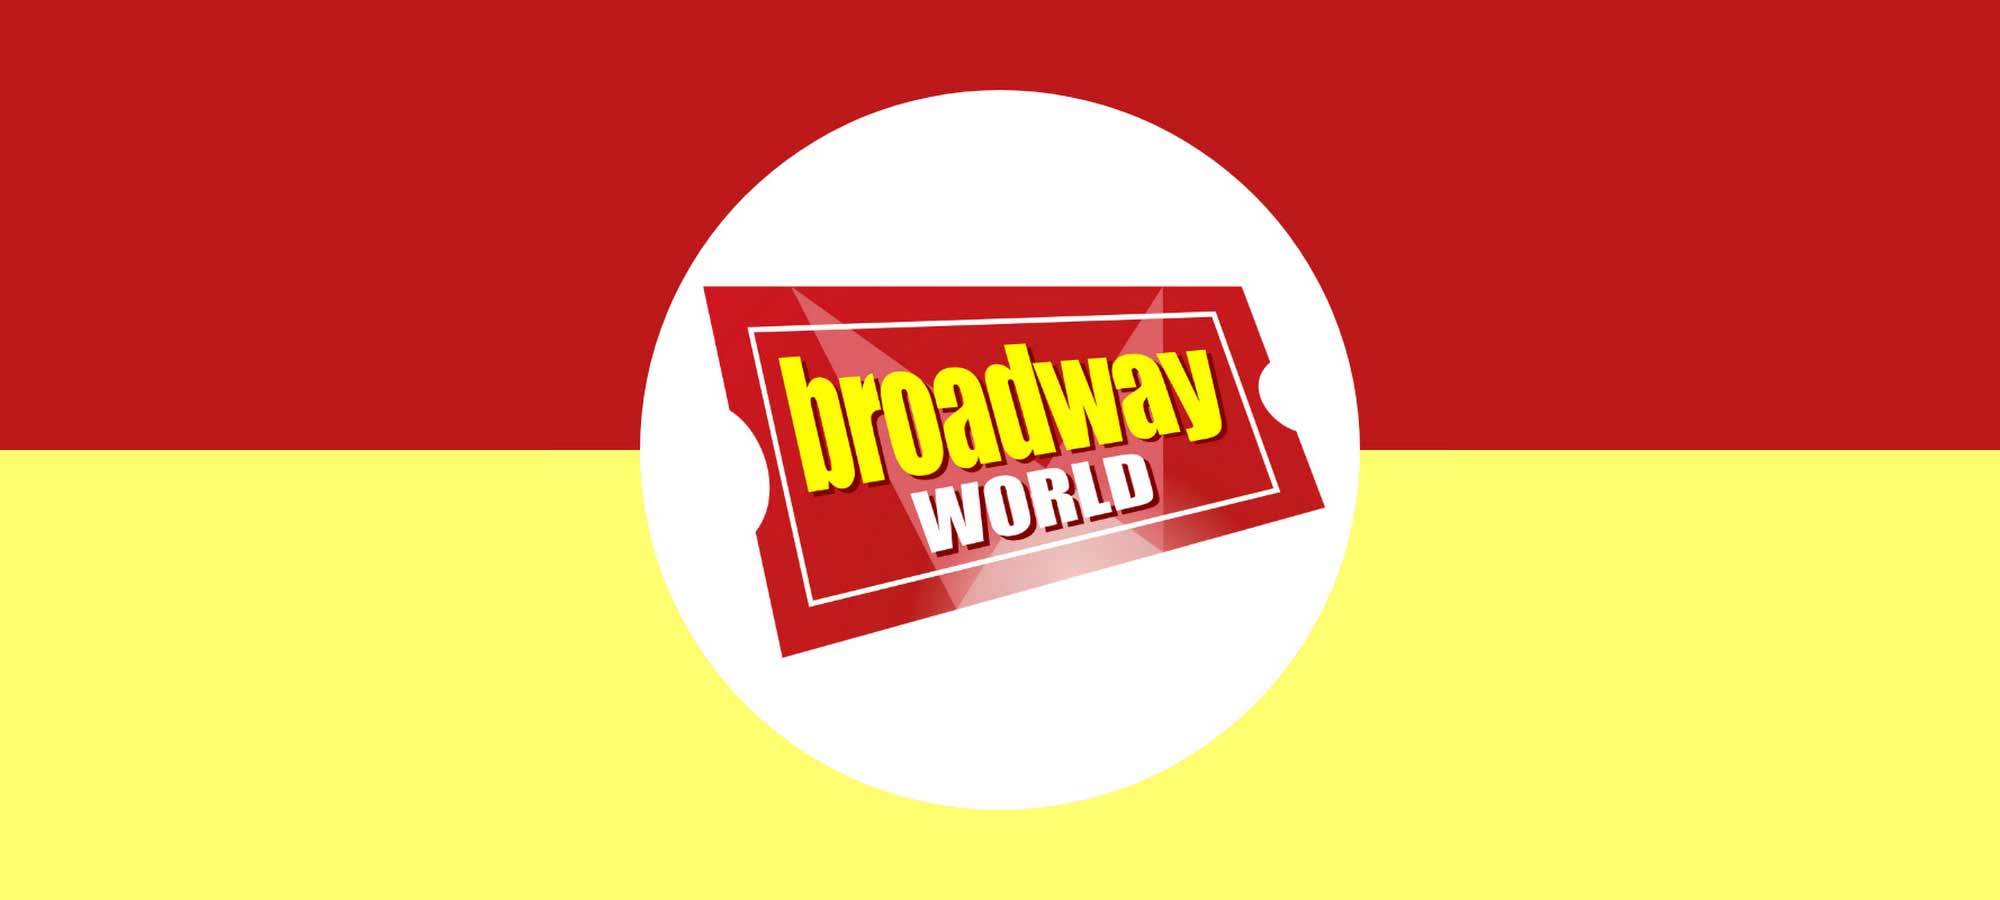 Broadway World logo